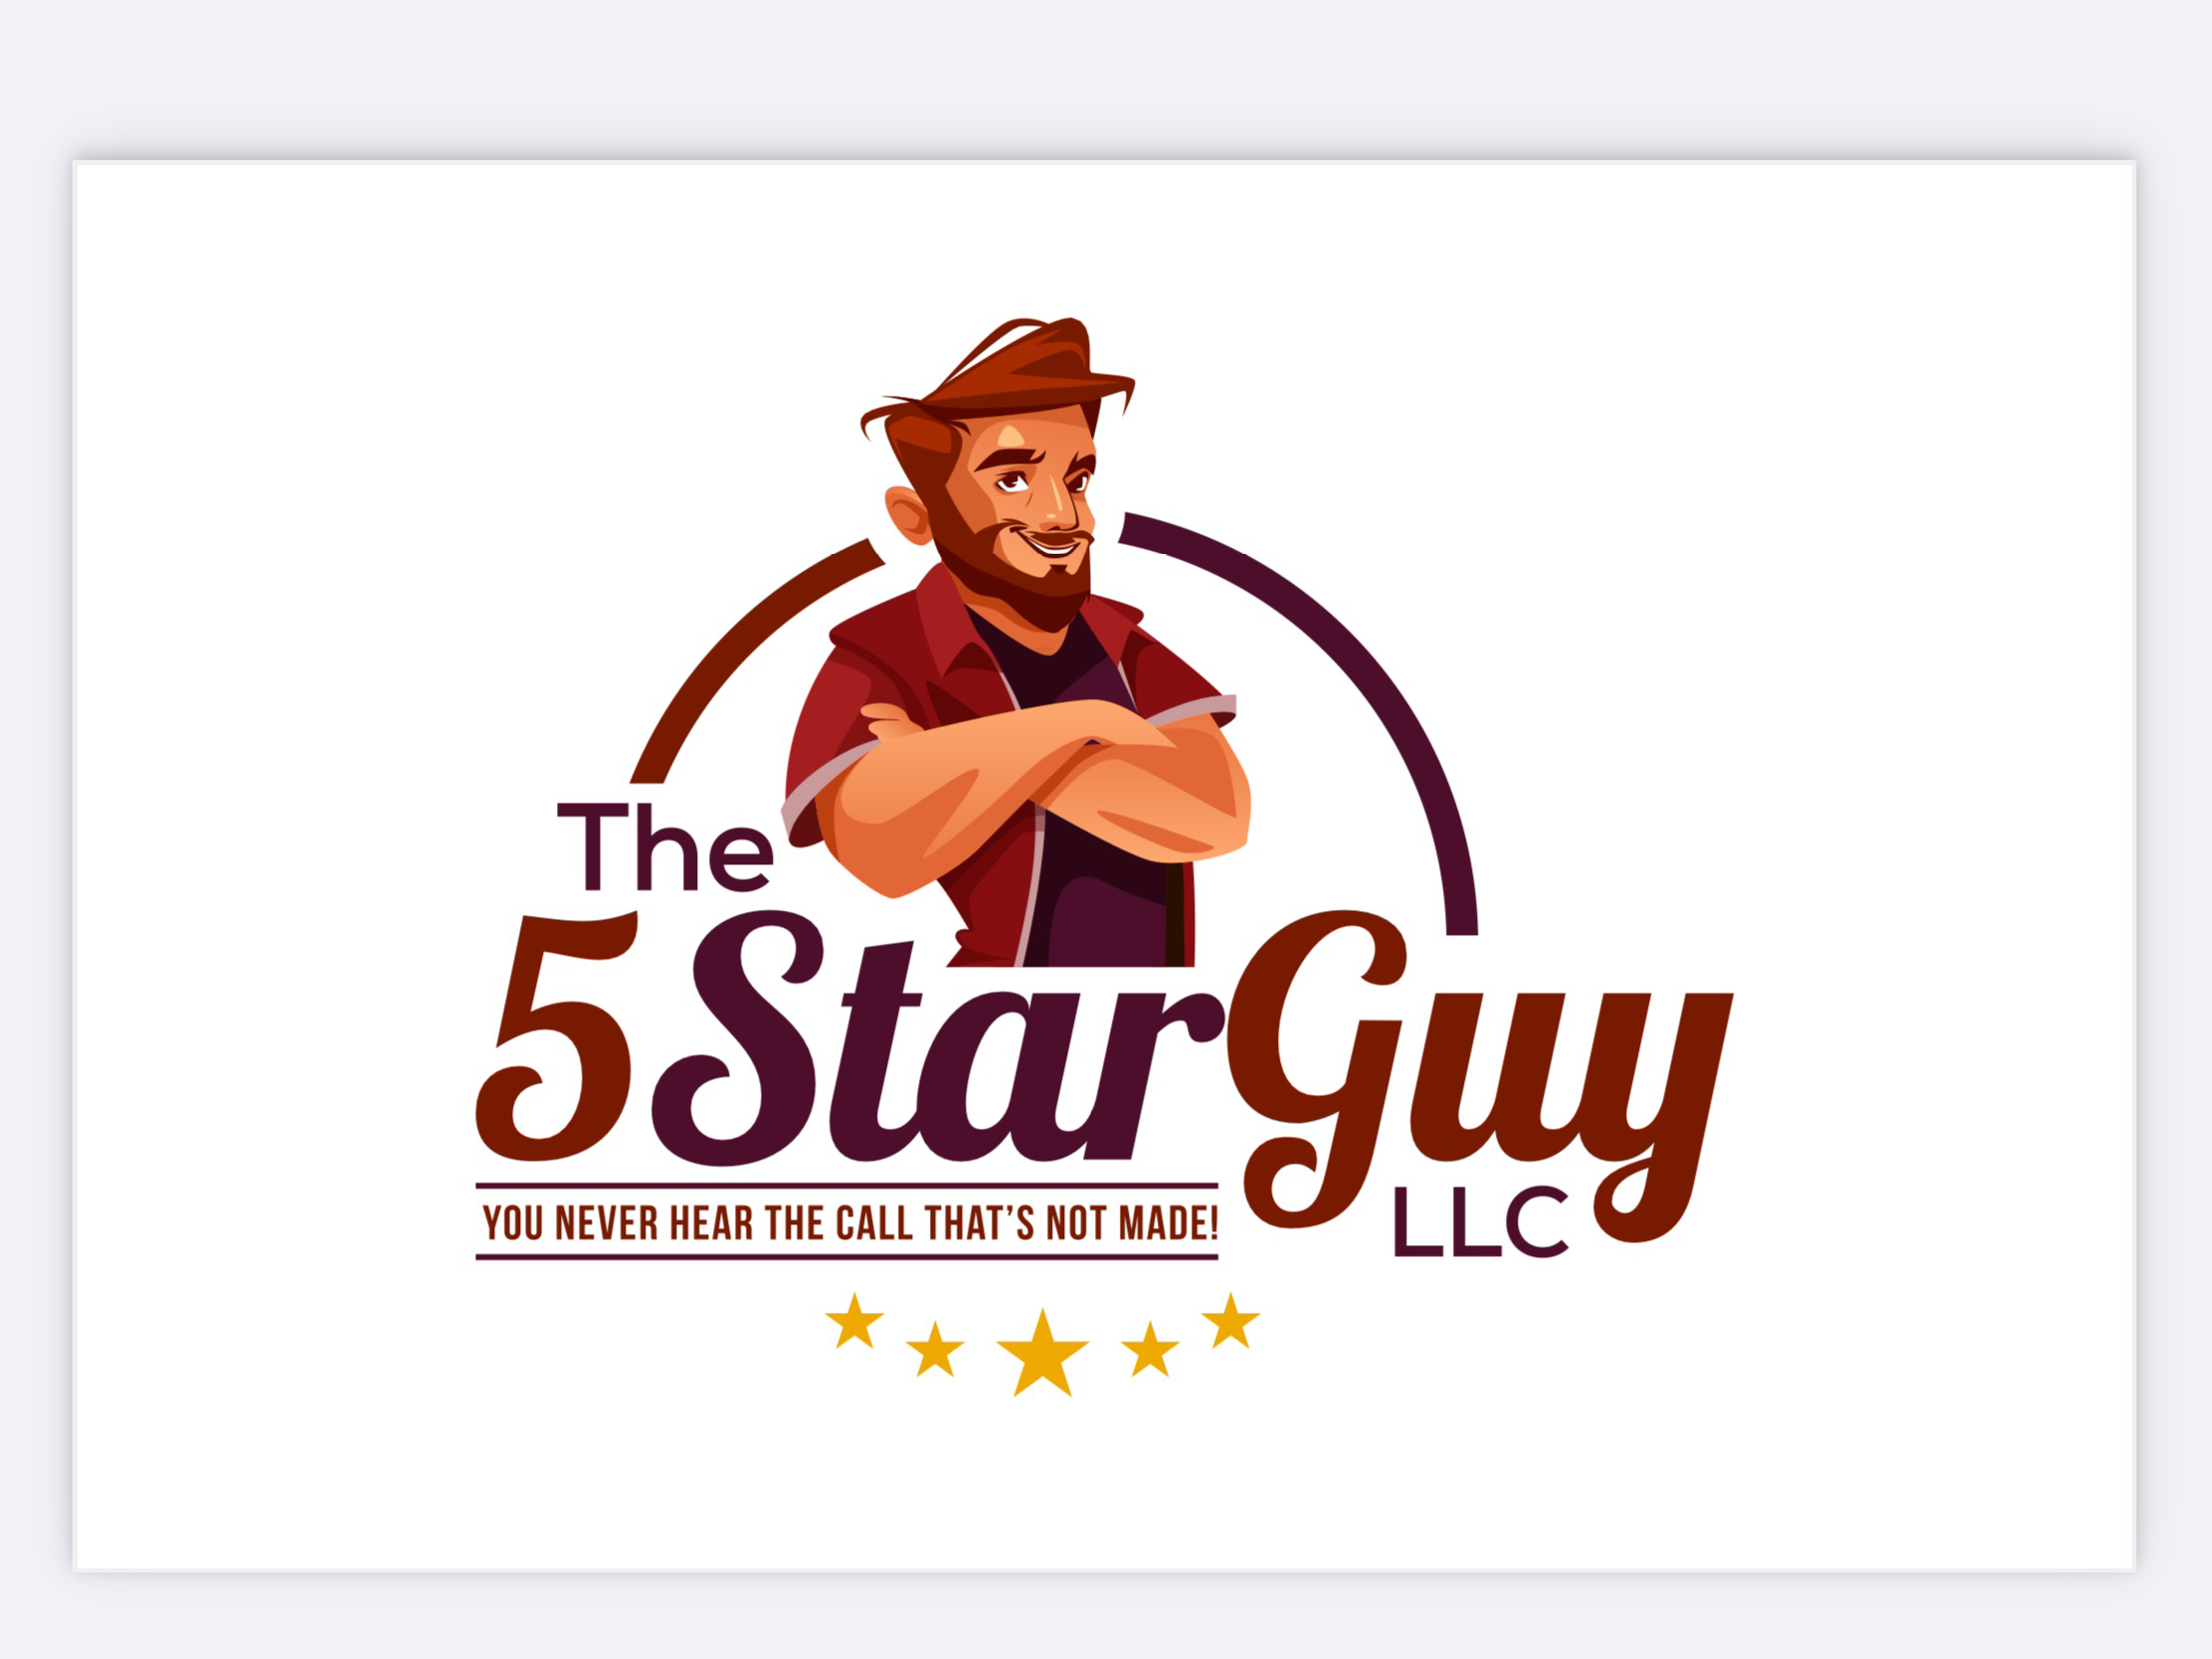 The 5 Star Guy LLC